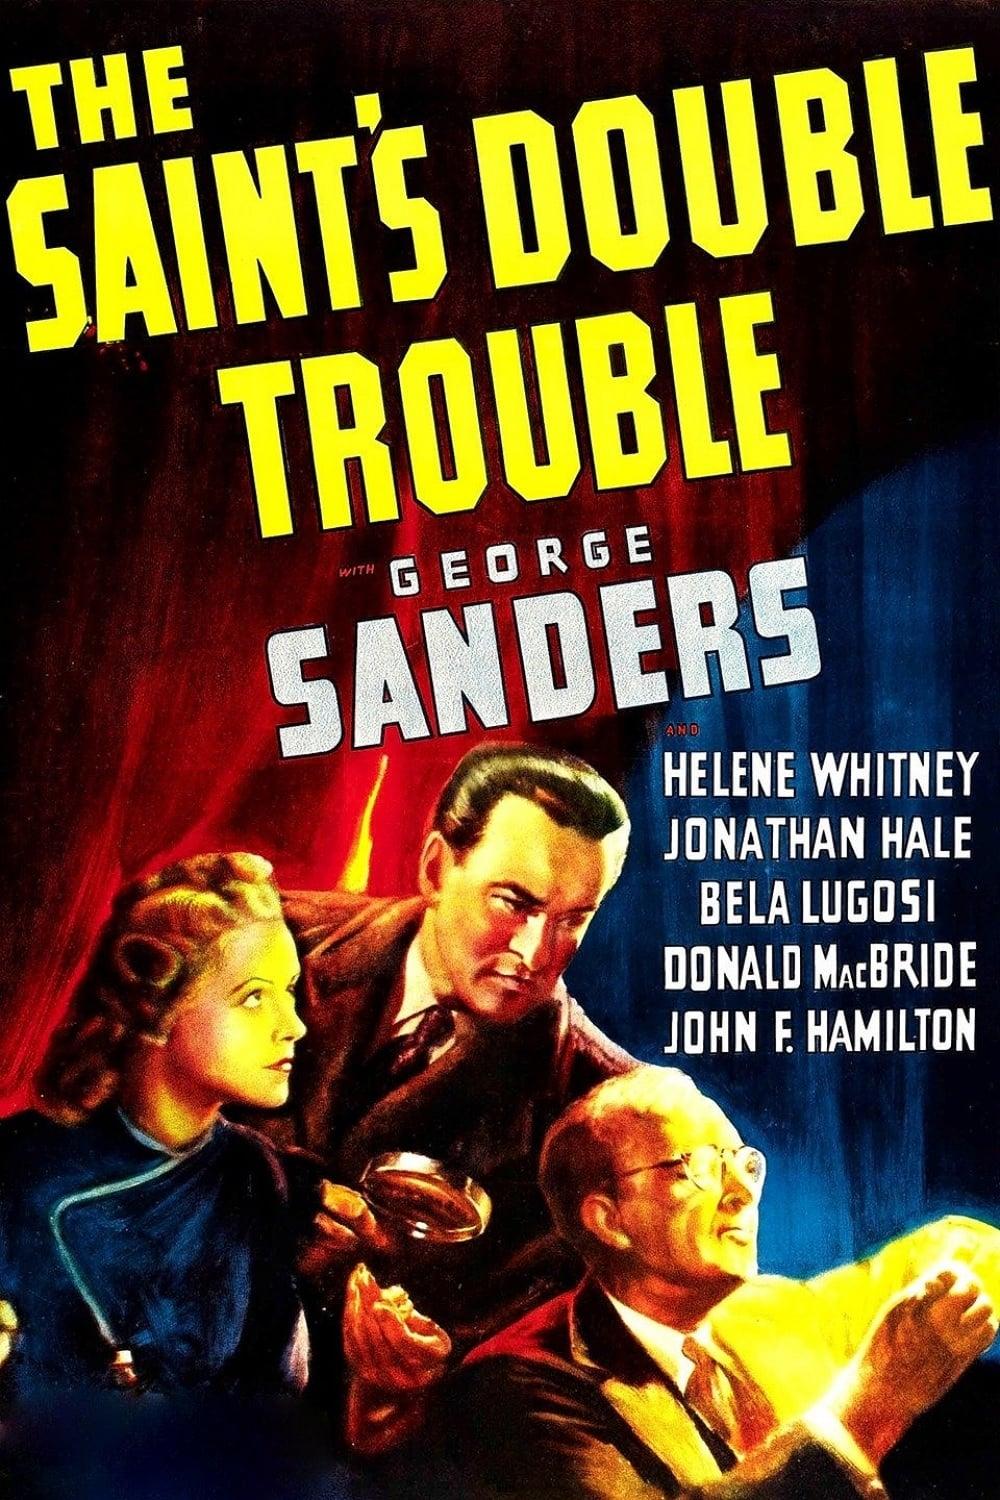 The Saint's Double Trouble poster